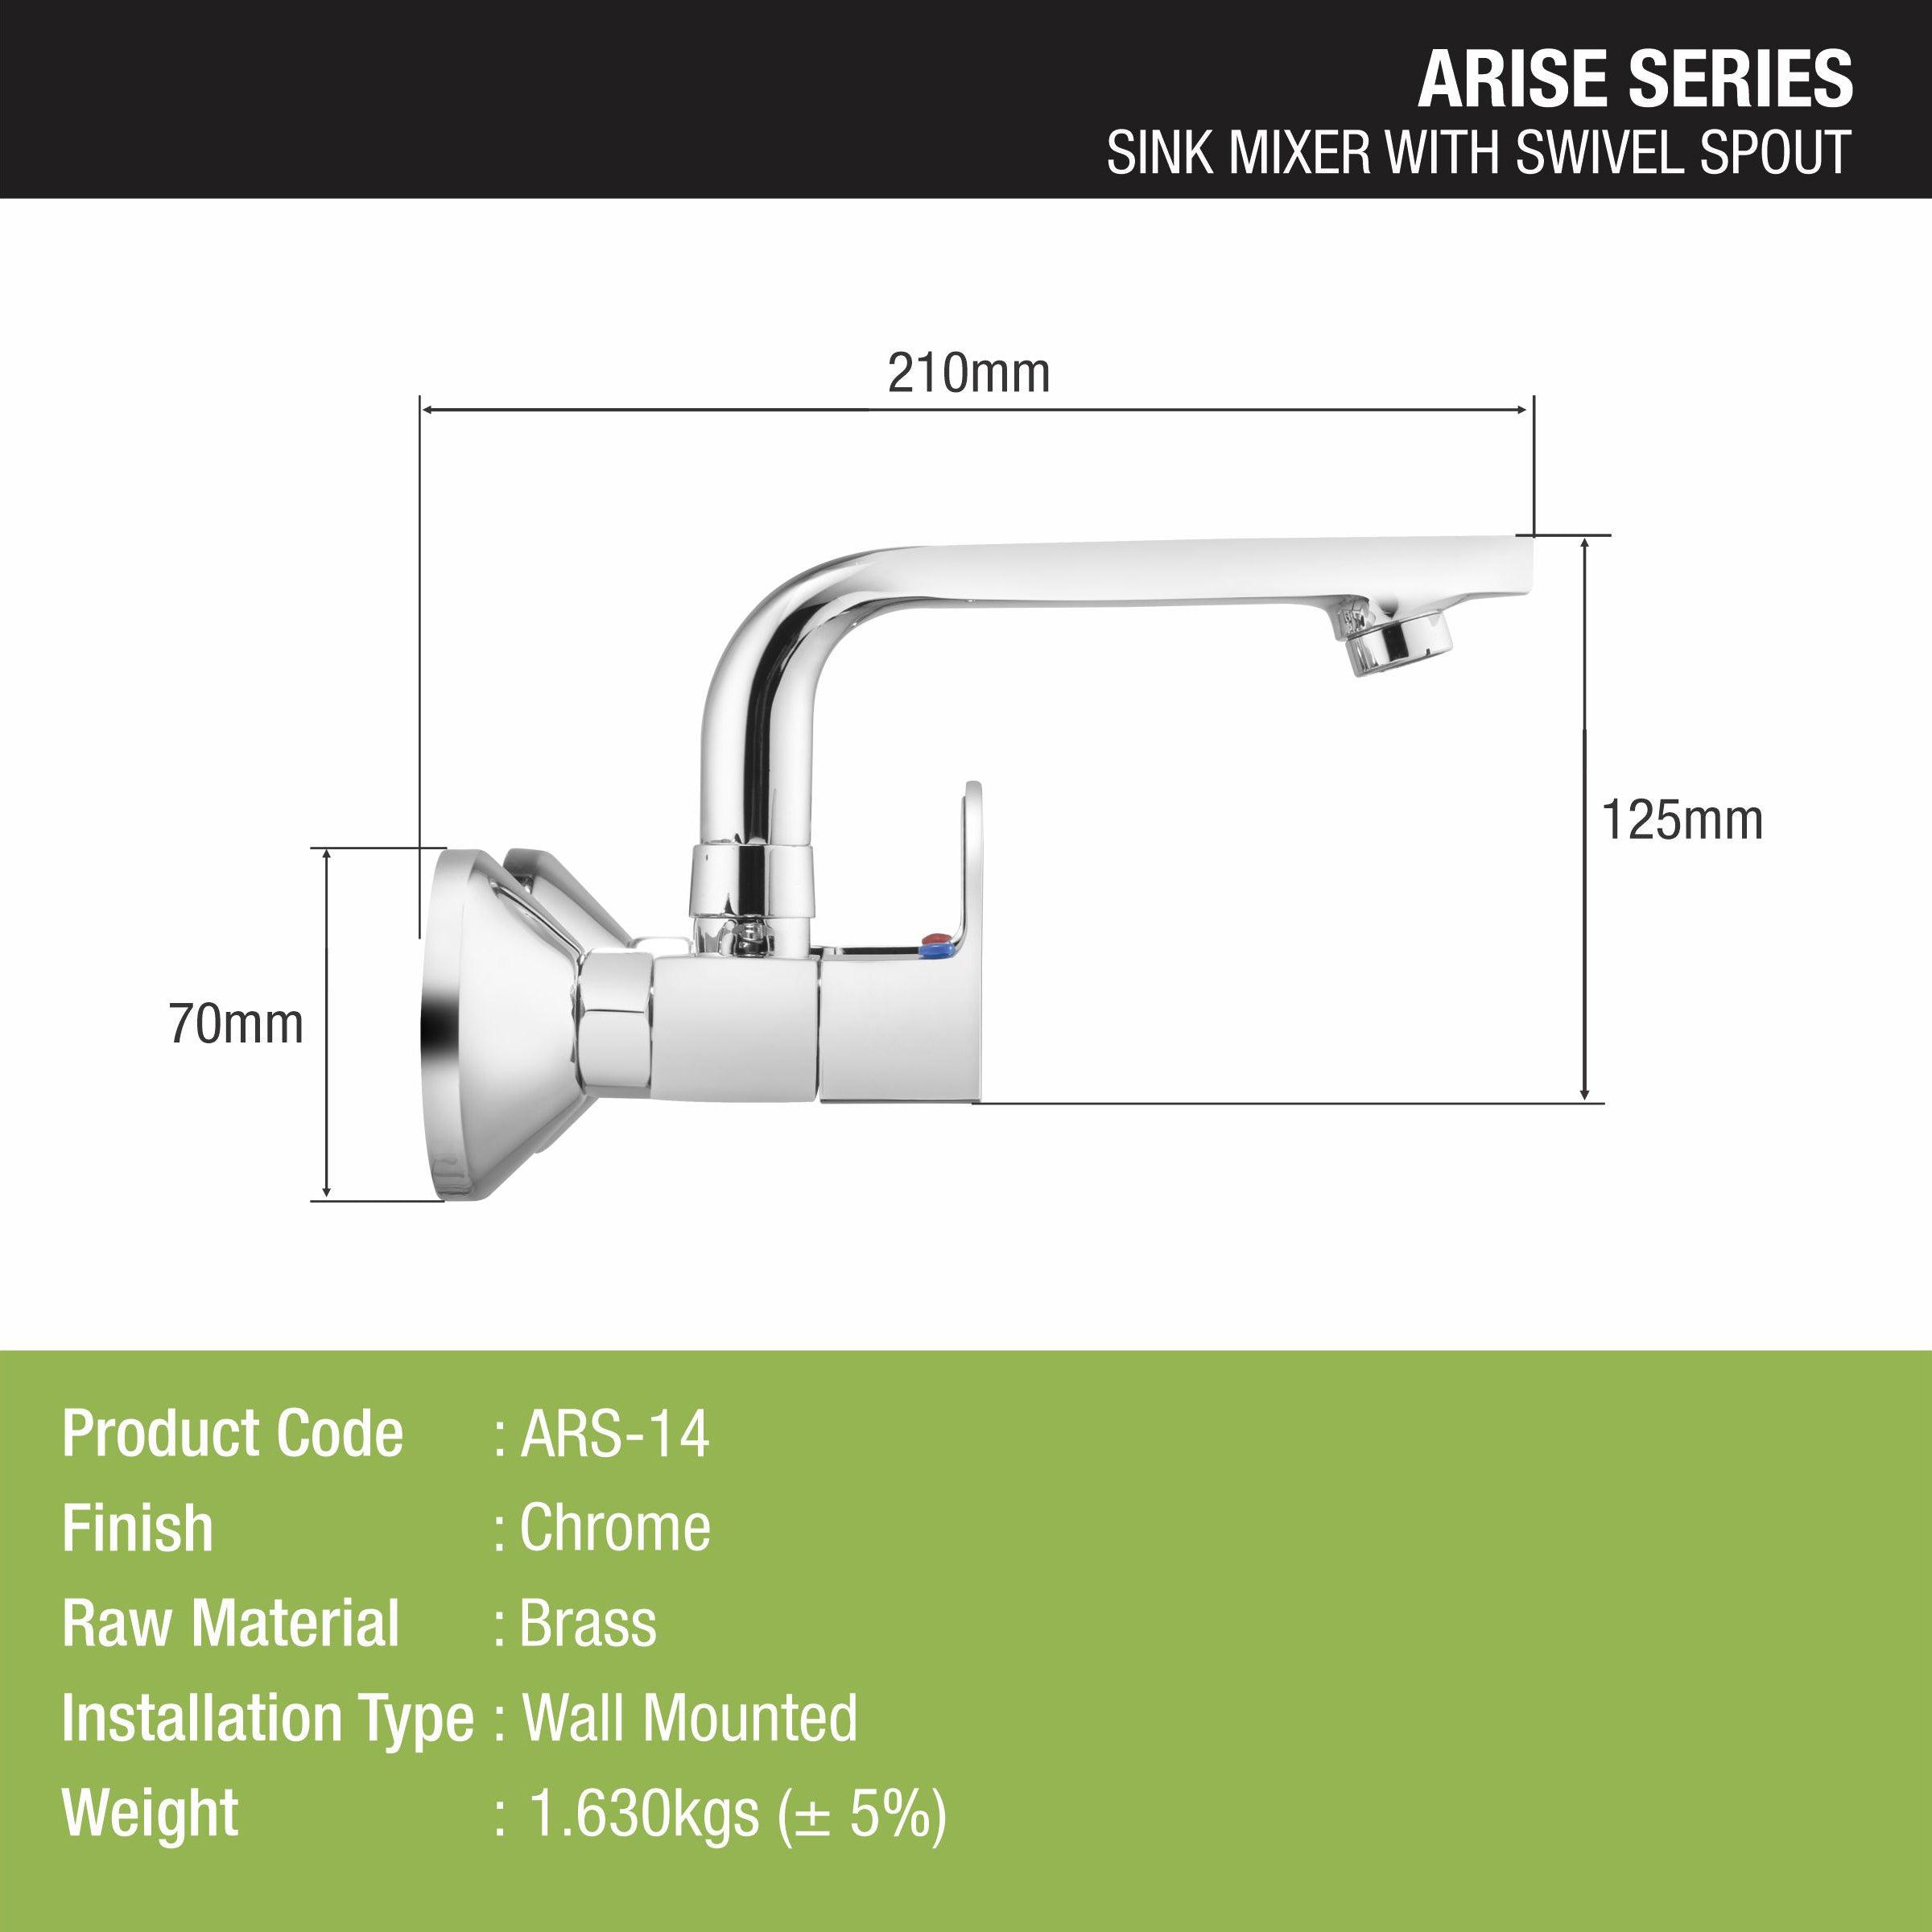 Arise Sink Mixer Brass Faucet with Swivel Spout Faucet - LIPKA - Lipka Home